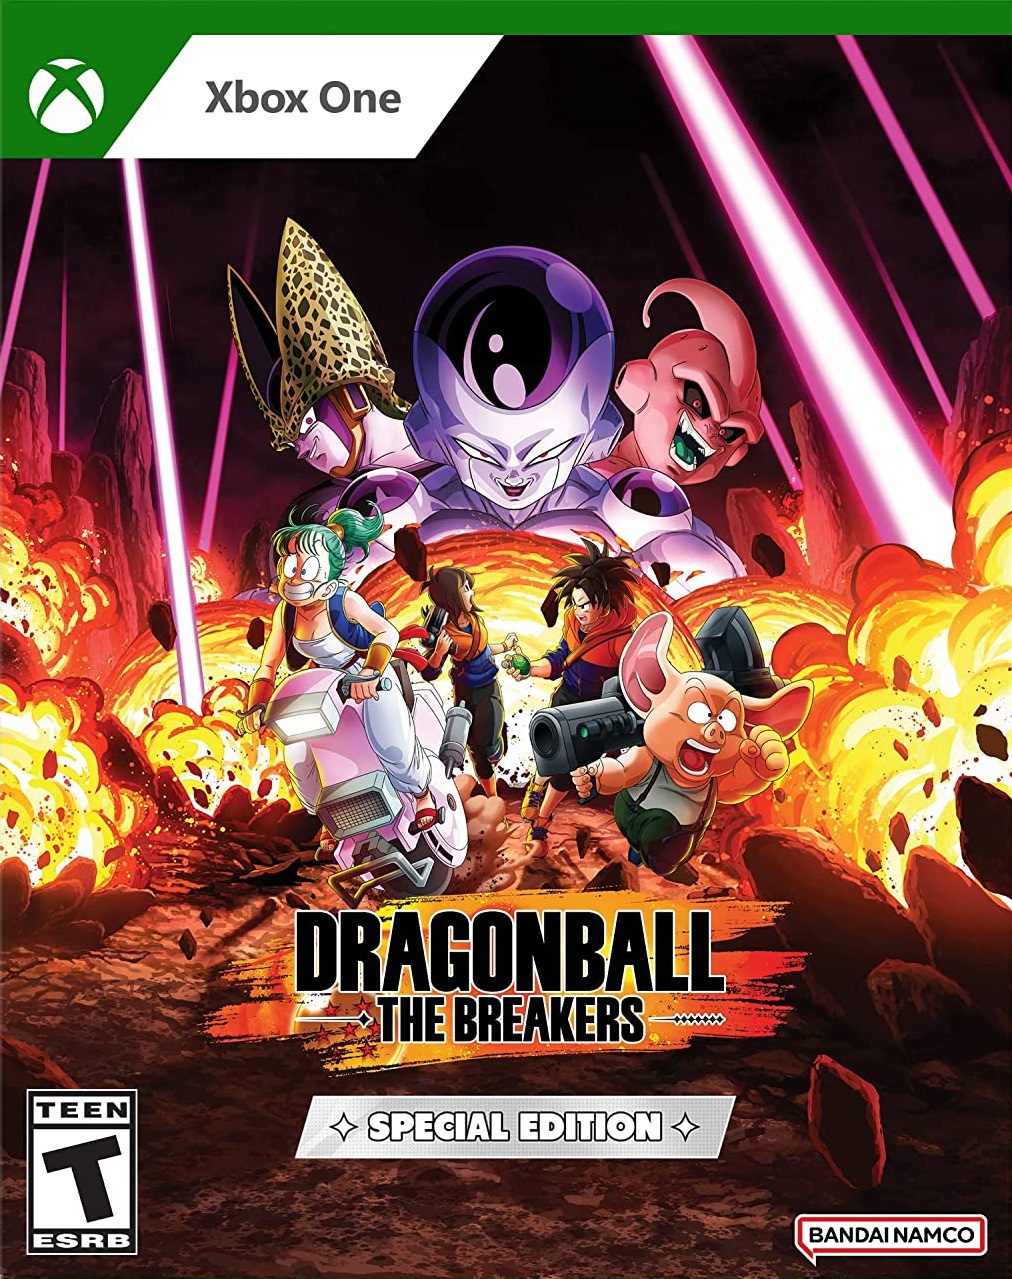 Dragon Ball: The Breakers open beta starts tomorrow